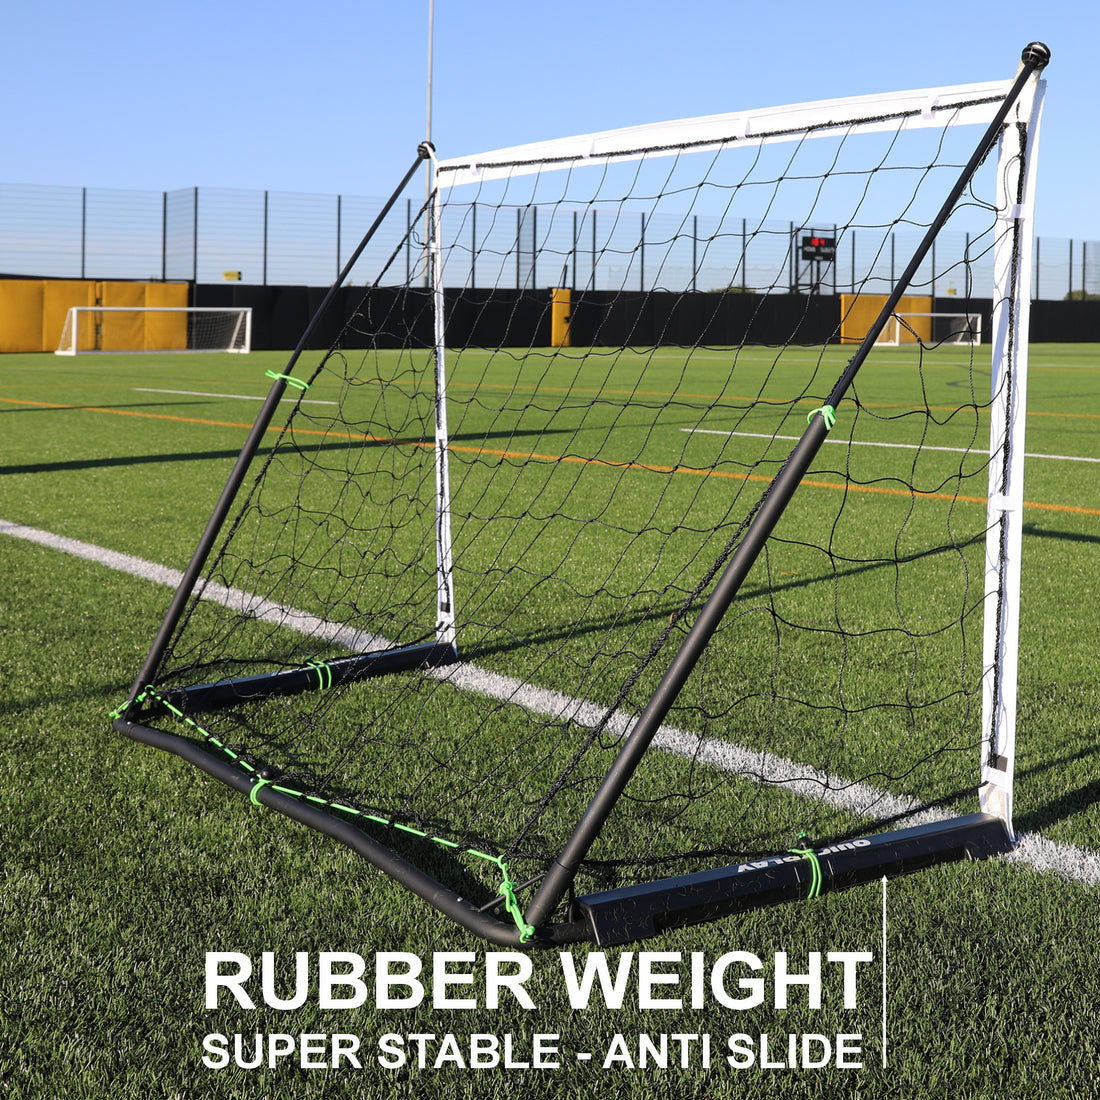 KICKSTER PRO Portable Football Goal 1.5x1m